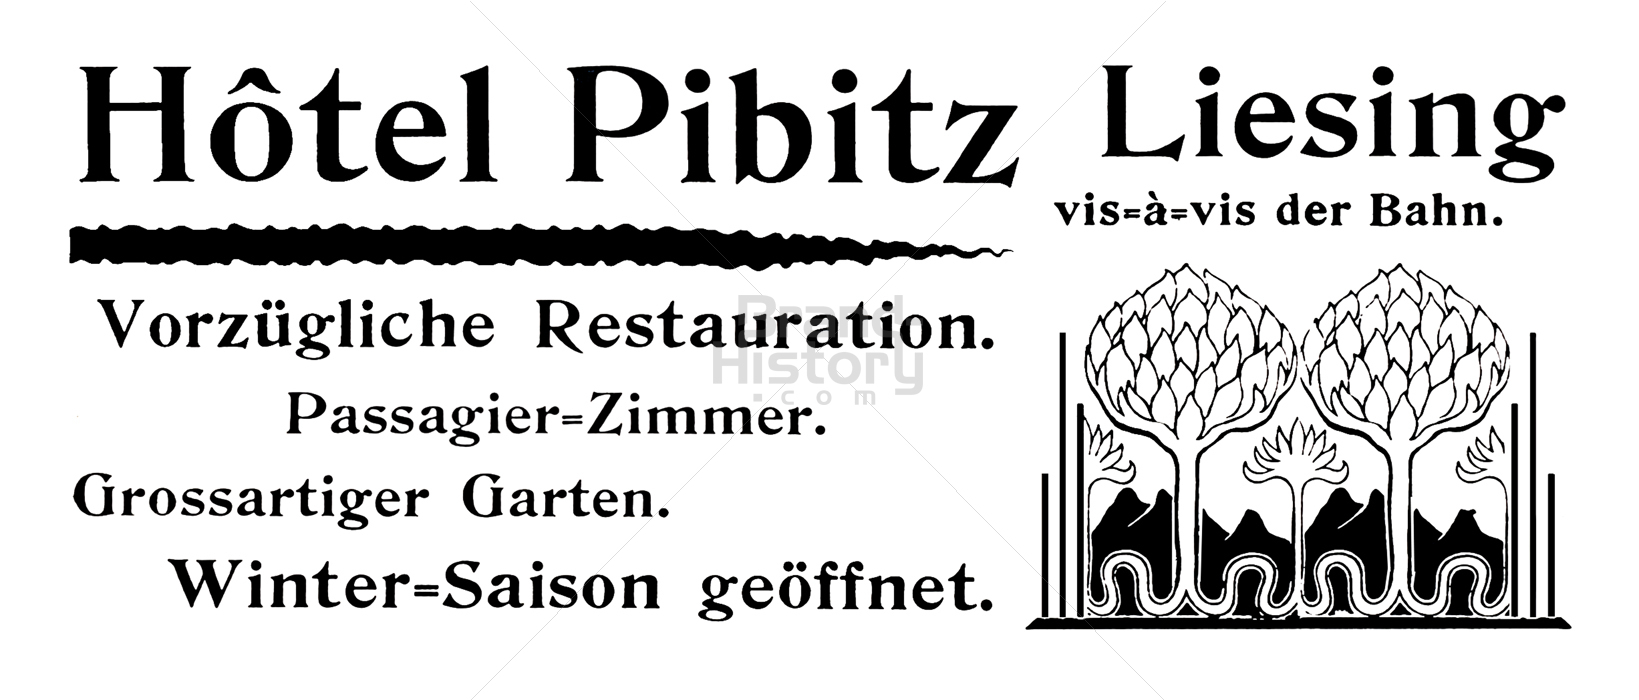 Hotel Pibitz, Liesing